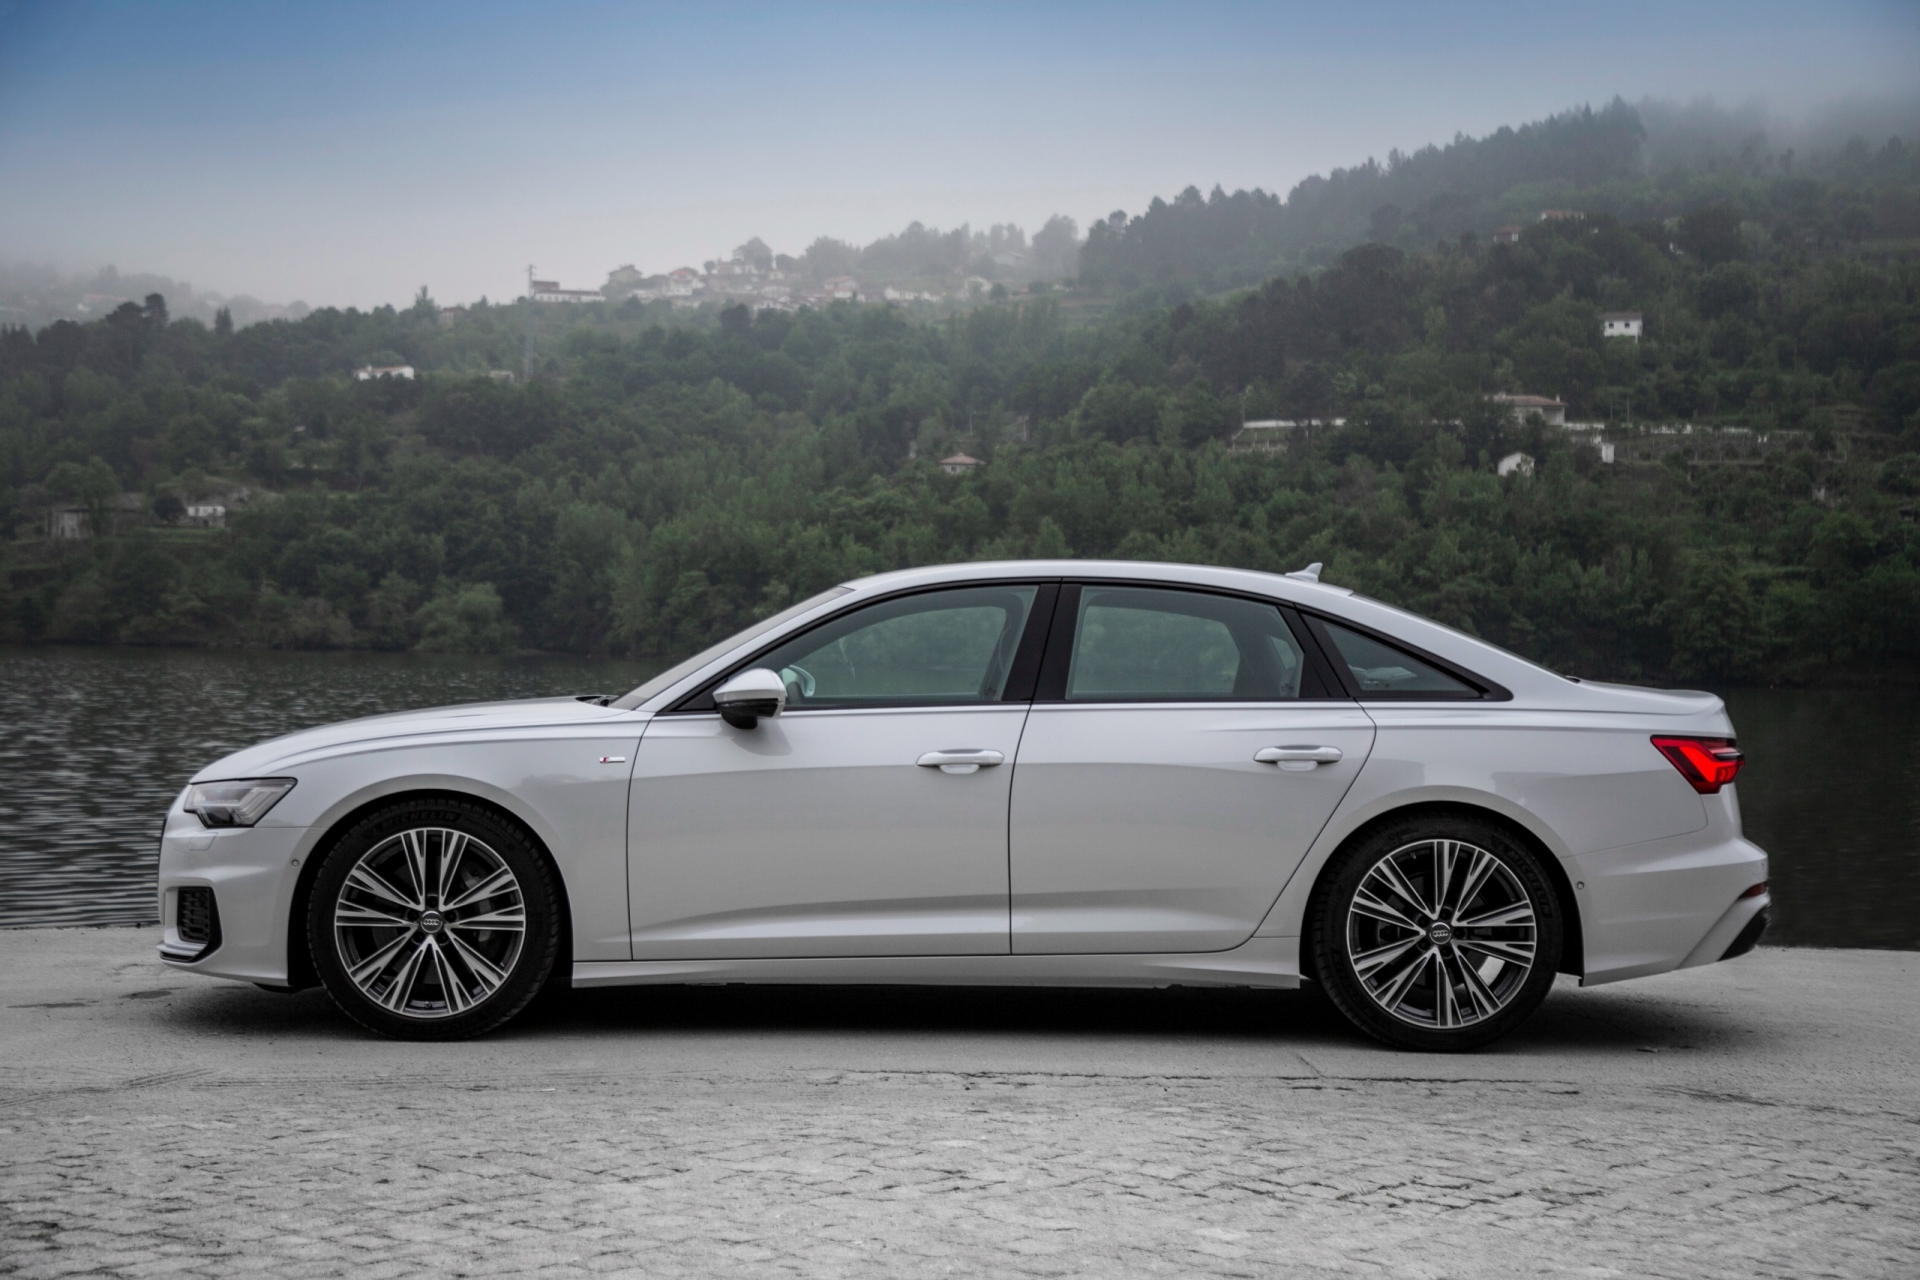 Audi A6 (C8/4K) - цены, отзывы, характеристики A6 (C8/4K) от Audi